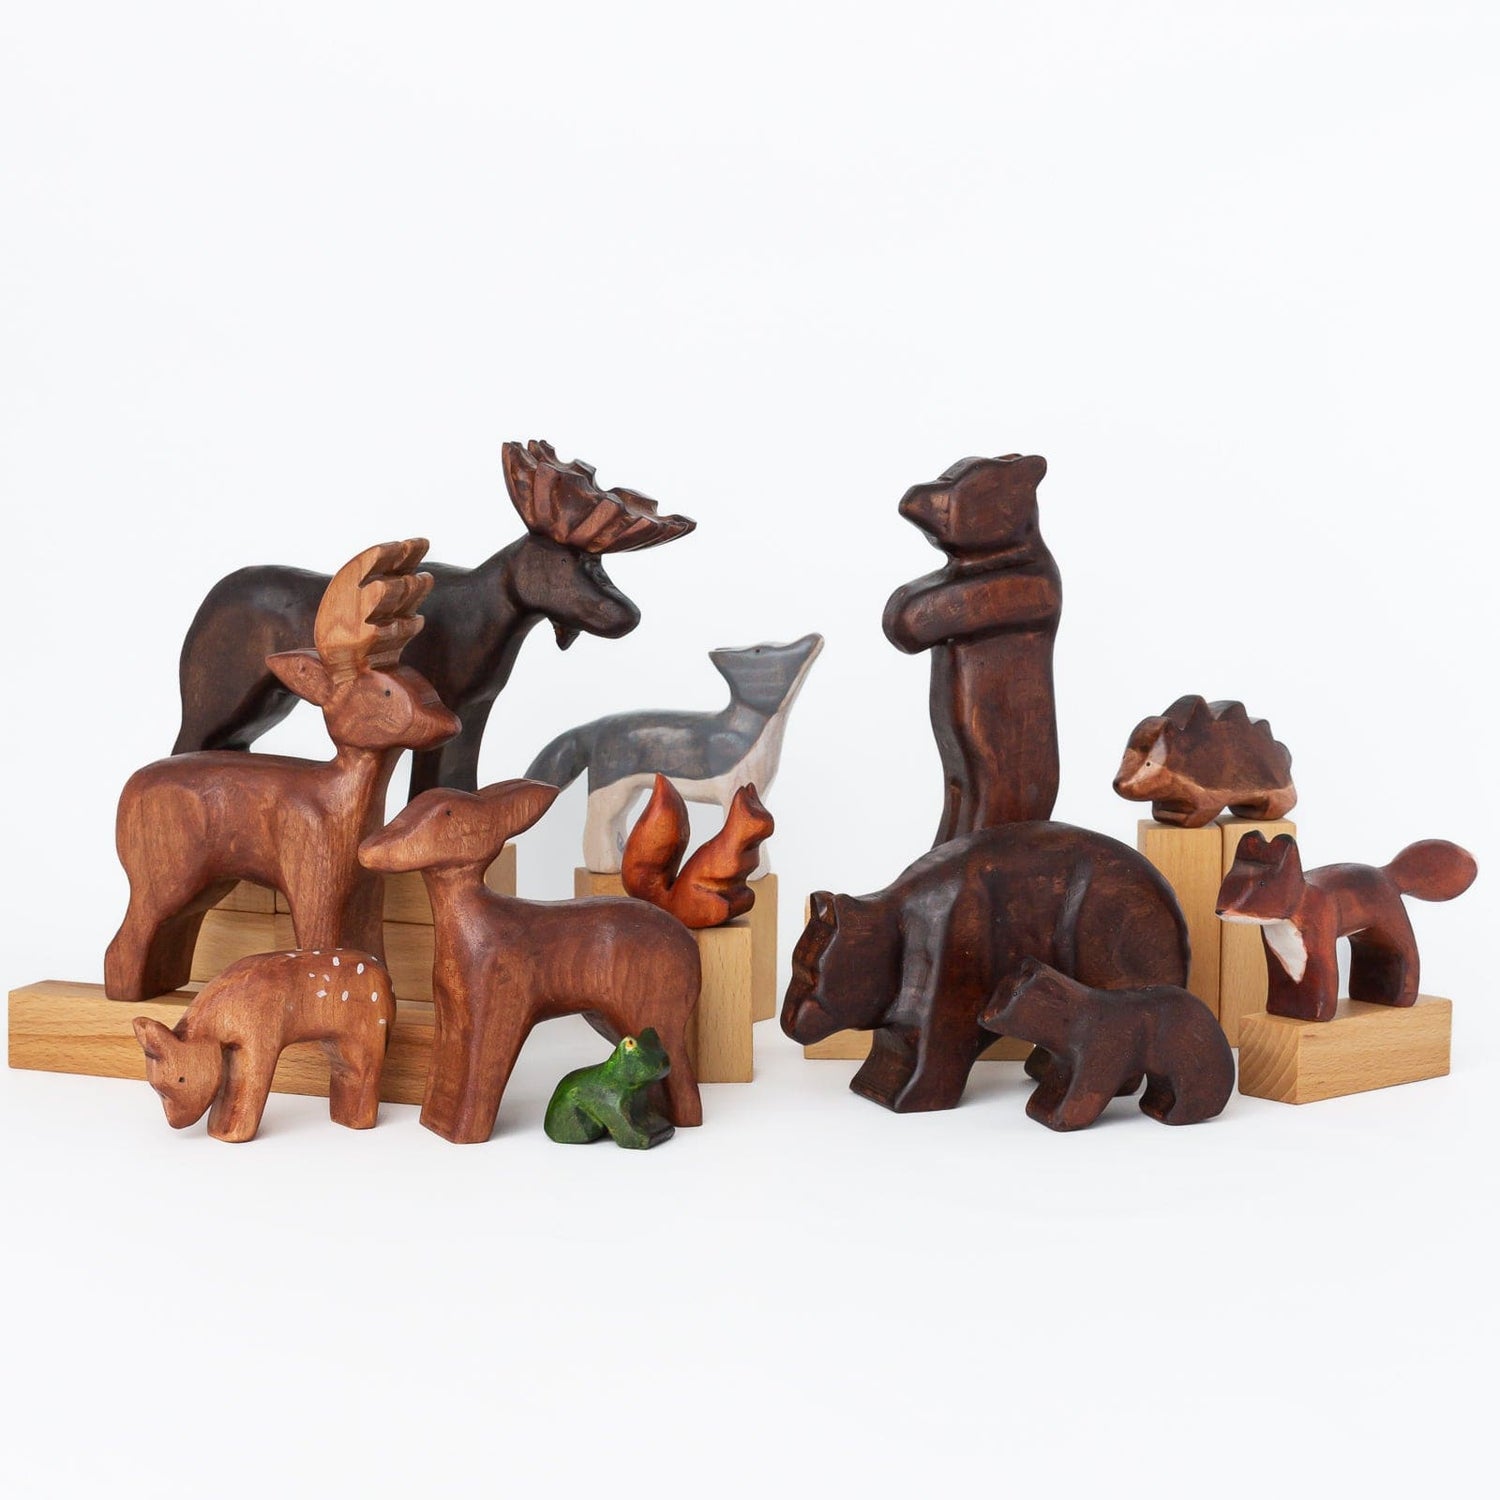 Bumbleberry Toys Wooden Animals "Freddie Fox" Wooden Animal Toy (Handmade in Canada)